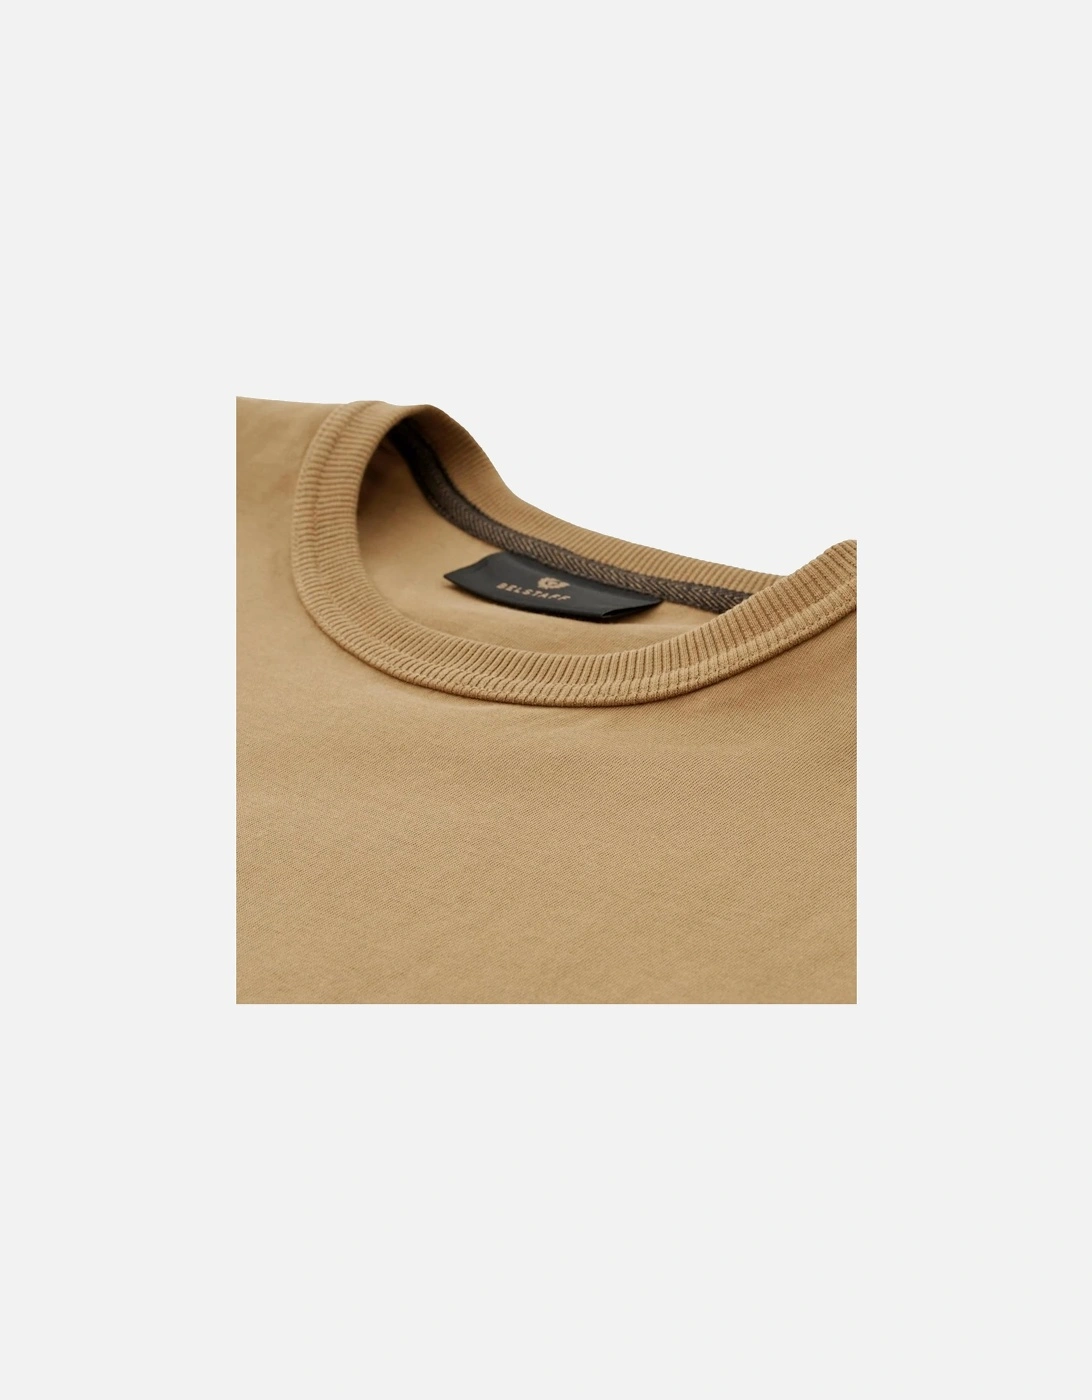 Centenary Applique Label T-Shirt British Khaki